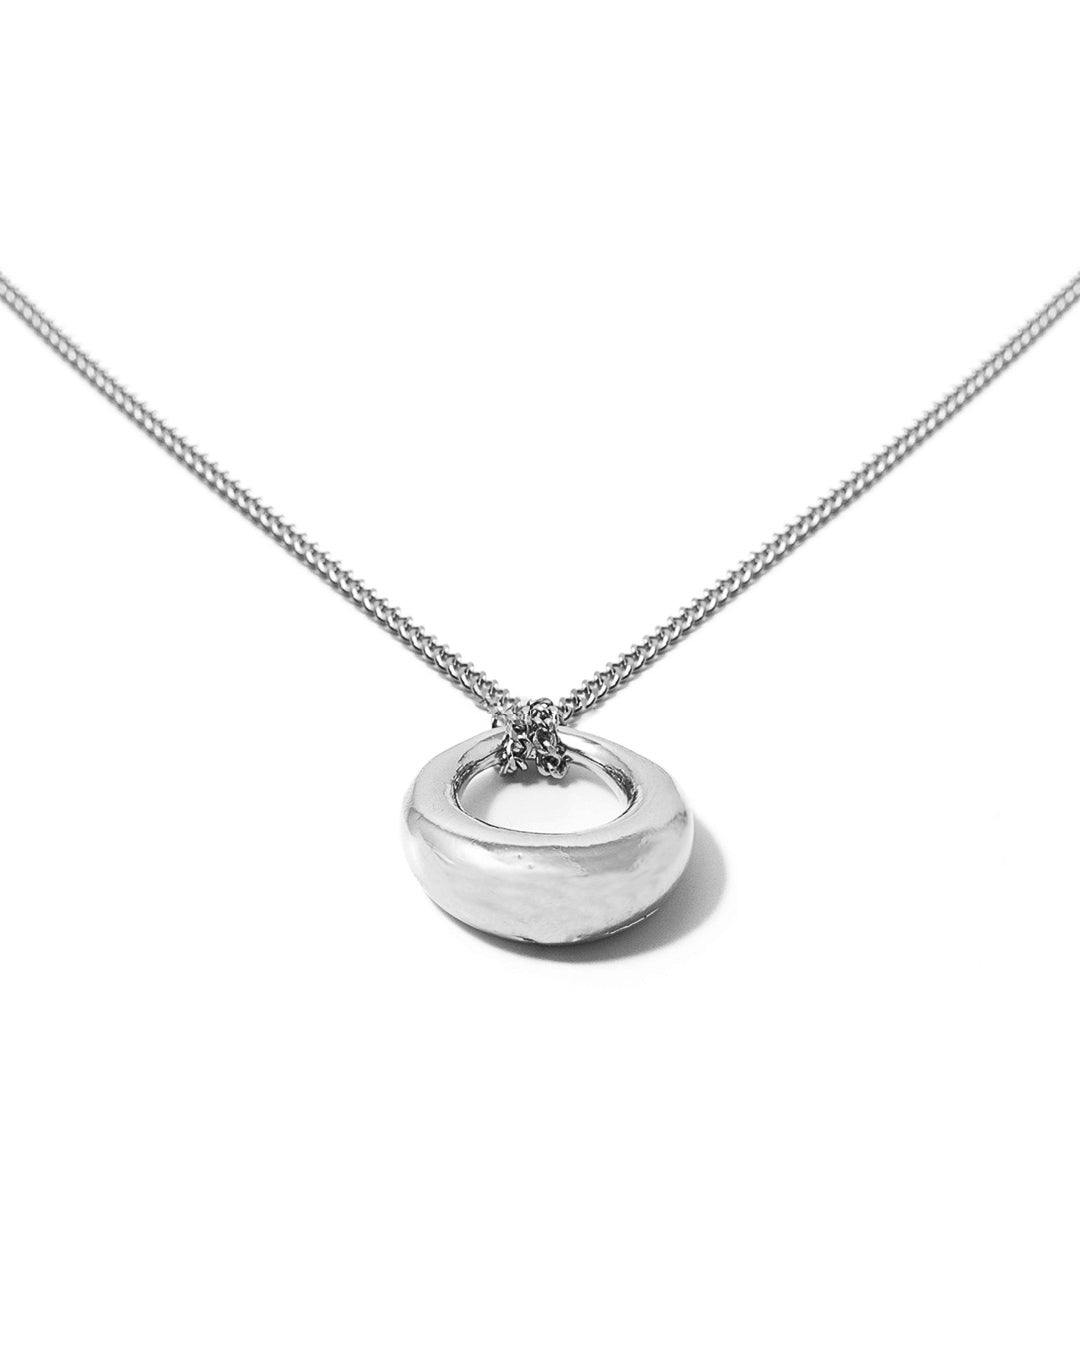 Domeo Silver Necklace